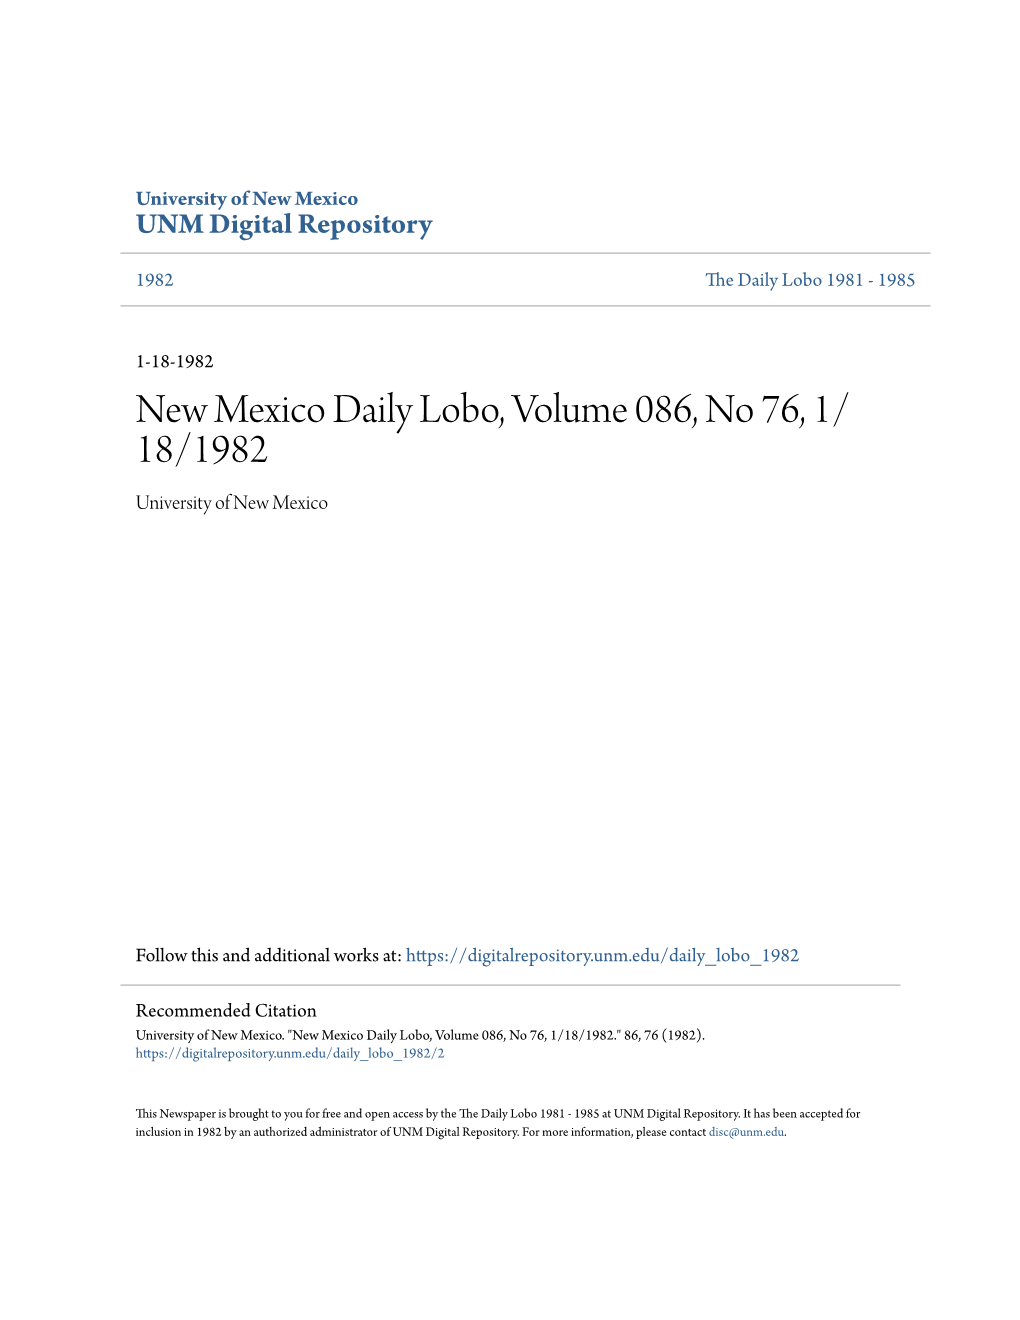 New Mexico Daily Lobo, Volume 086, No 76, 1/18/1982." 86, 76 (1982)